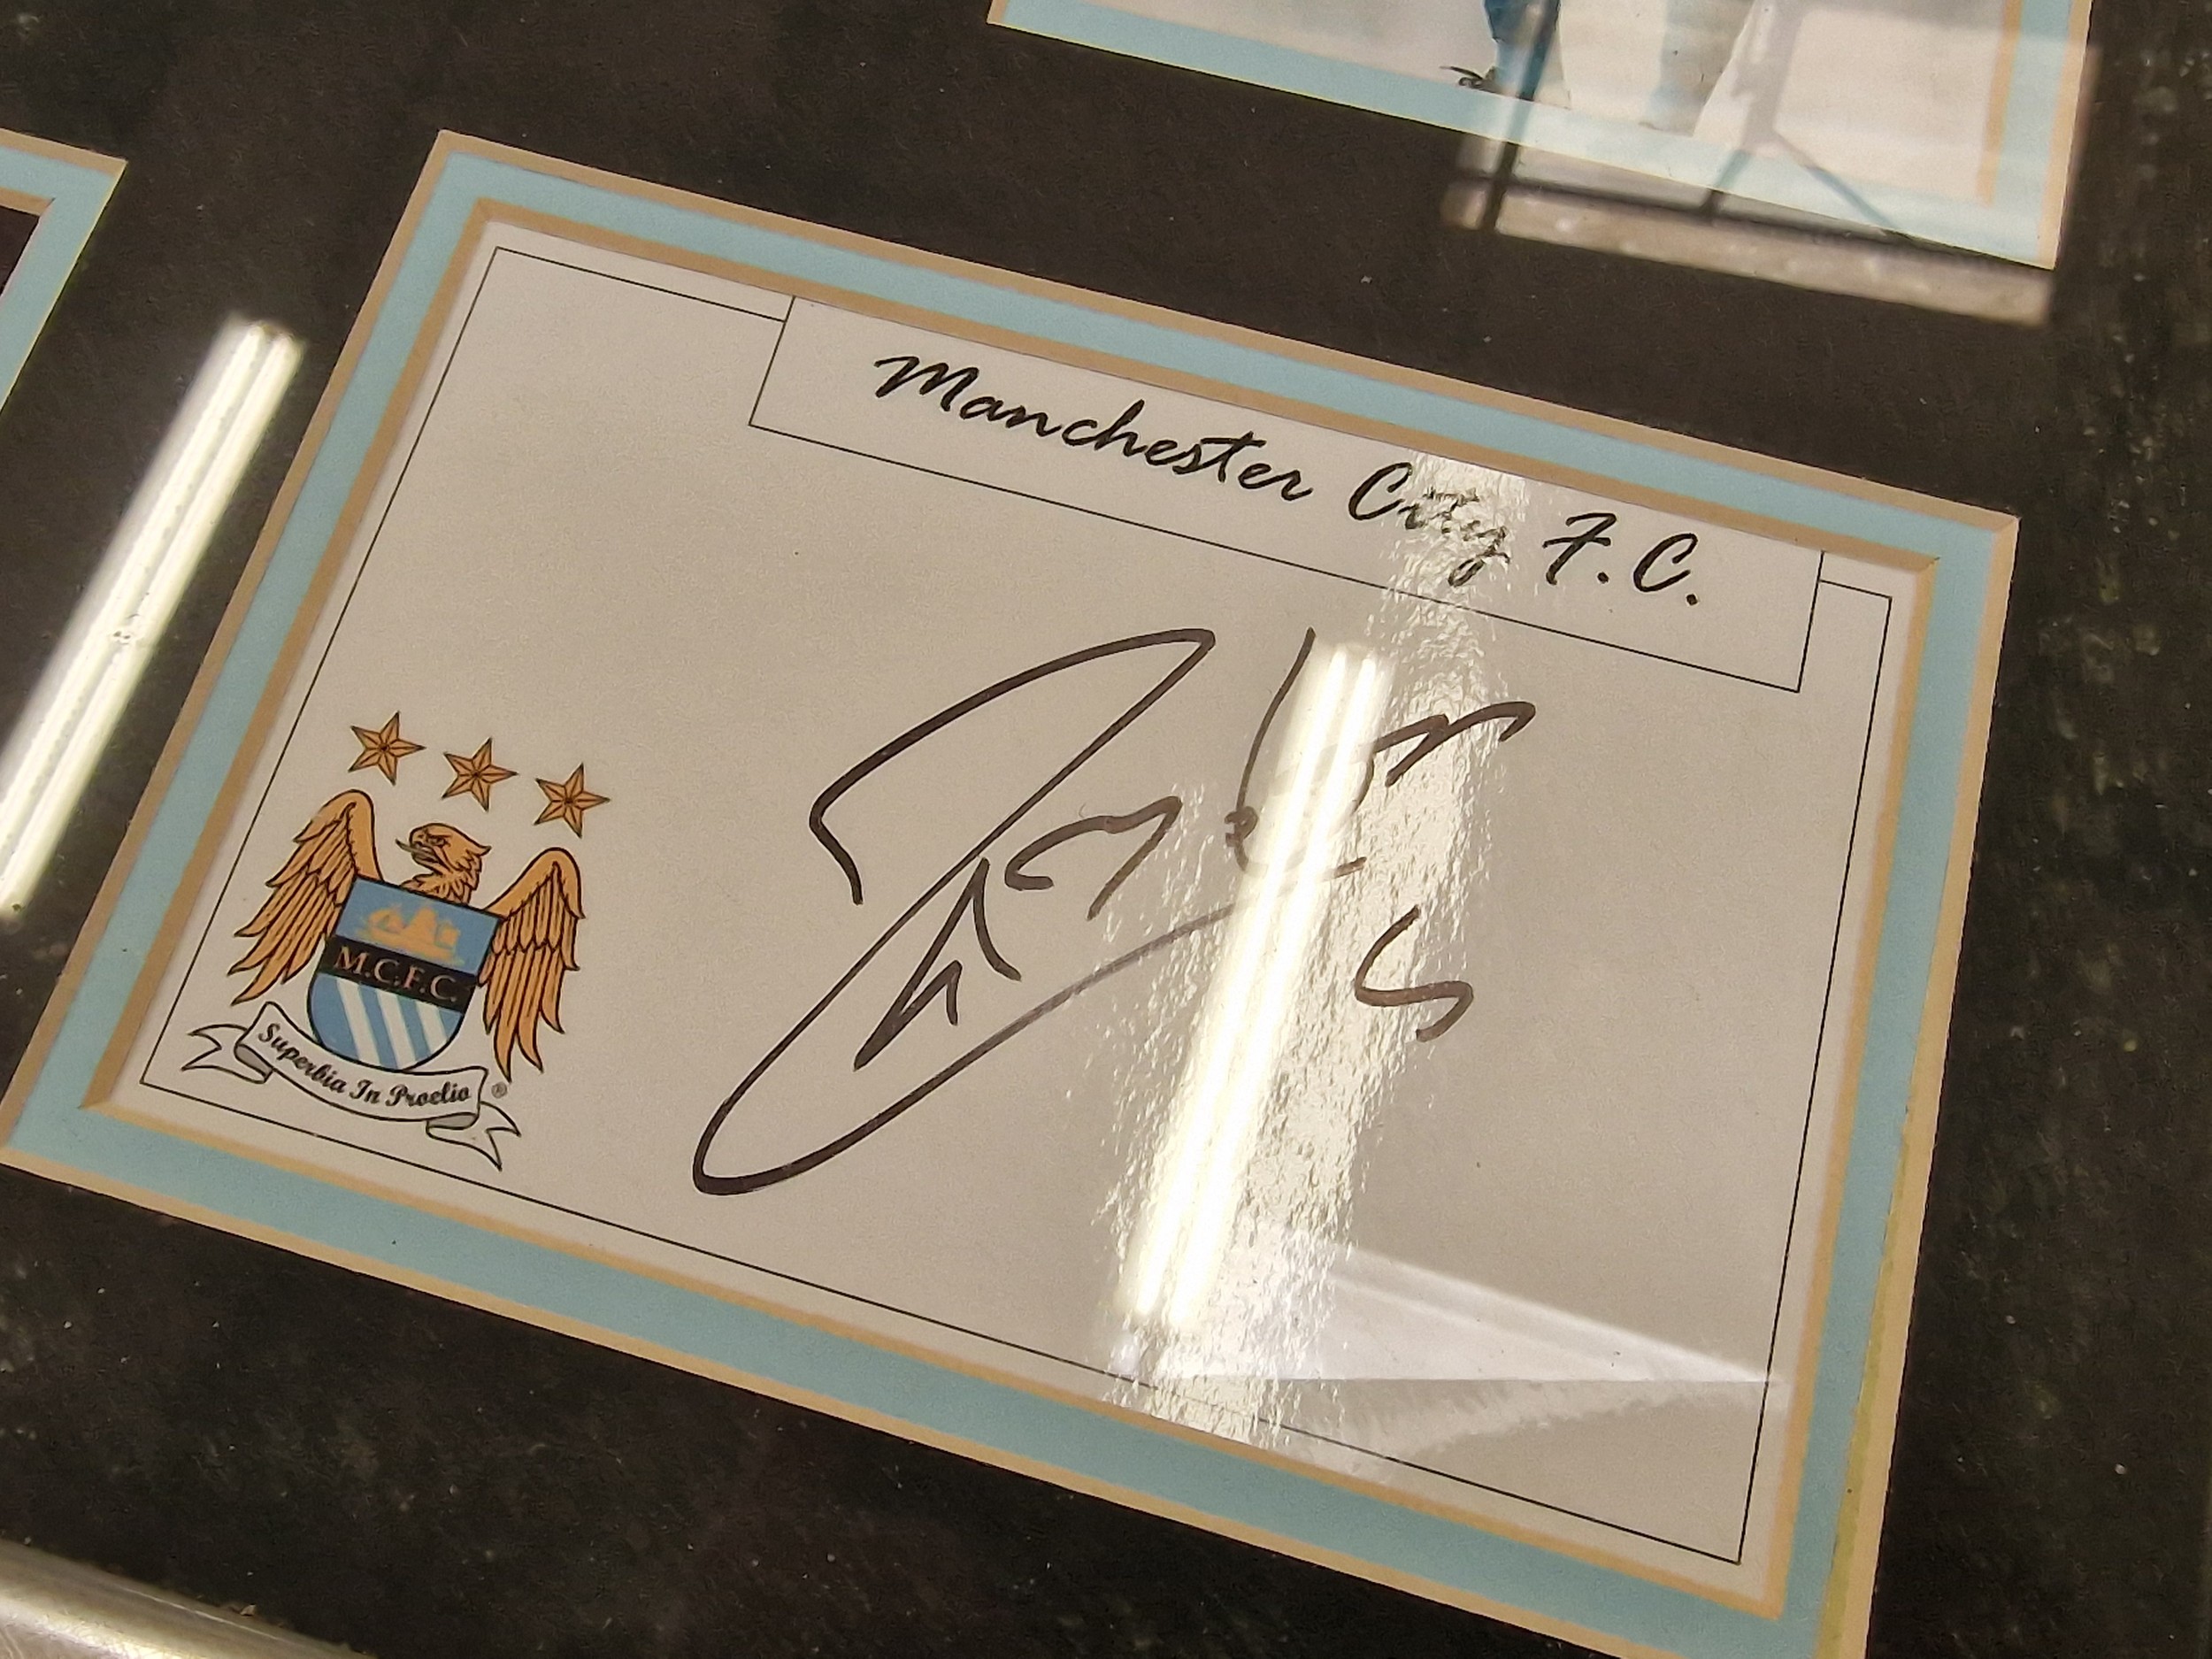 Manchester City football memorabilia autograph collection past and present Premiere league - Image 3 of 4